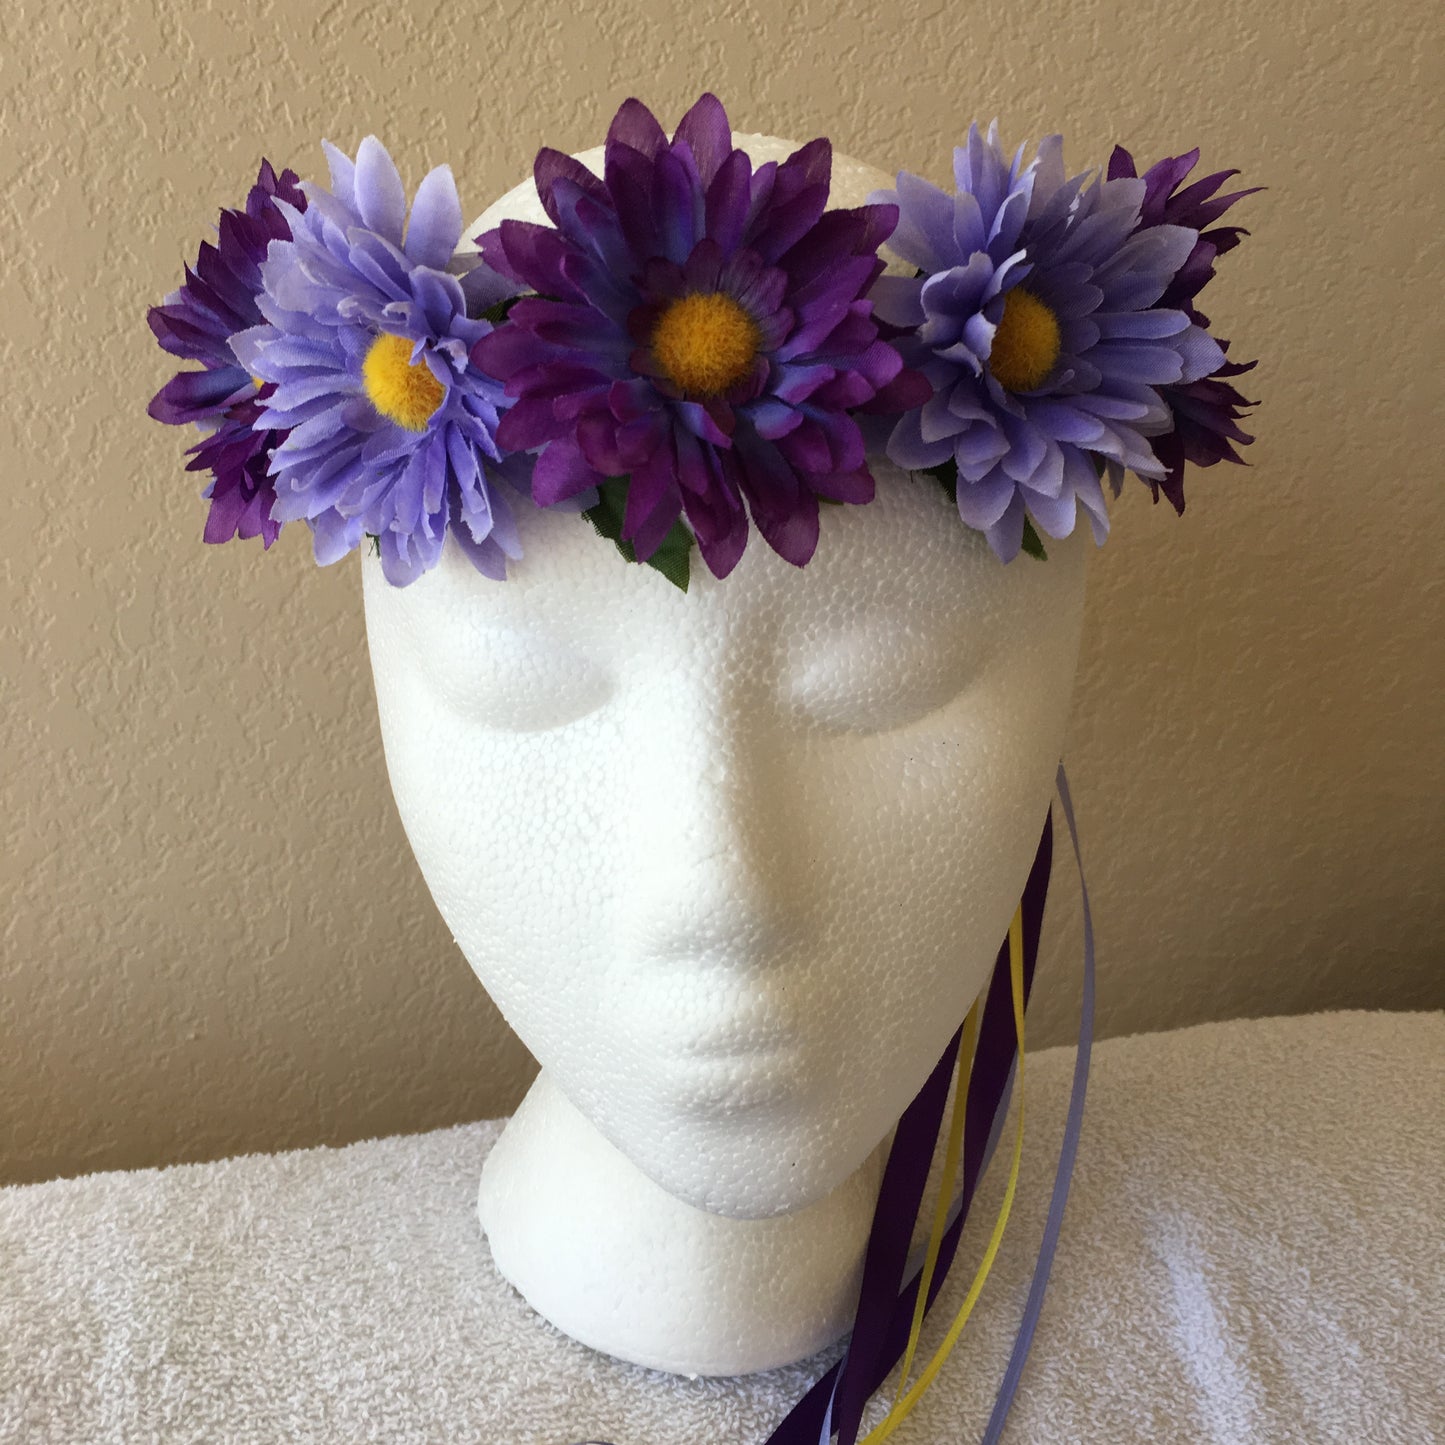 Small Wreath - Light & dark purple patterned daisies